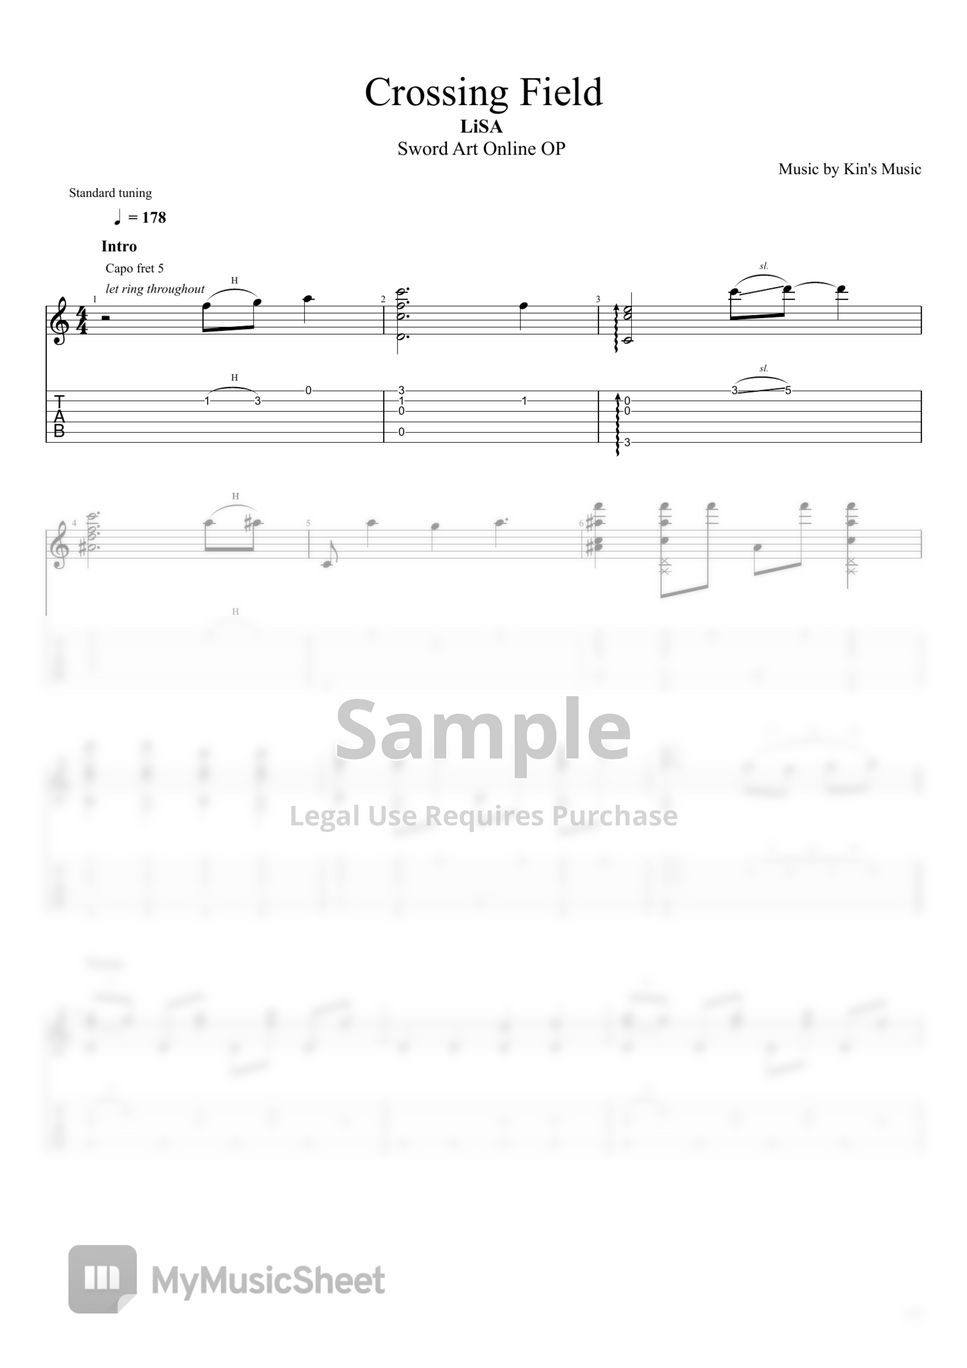 LiSA - Crossing Field[Easy Guitar Fingerstyle For Beginner] by Kin's Music